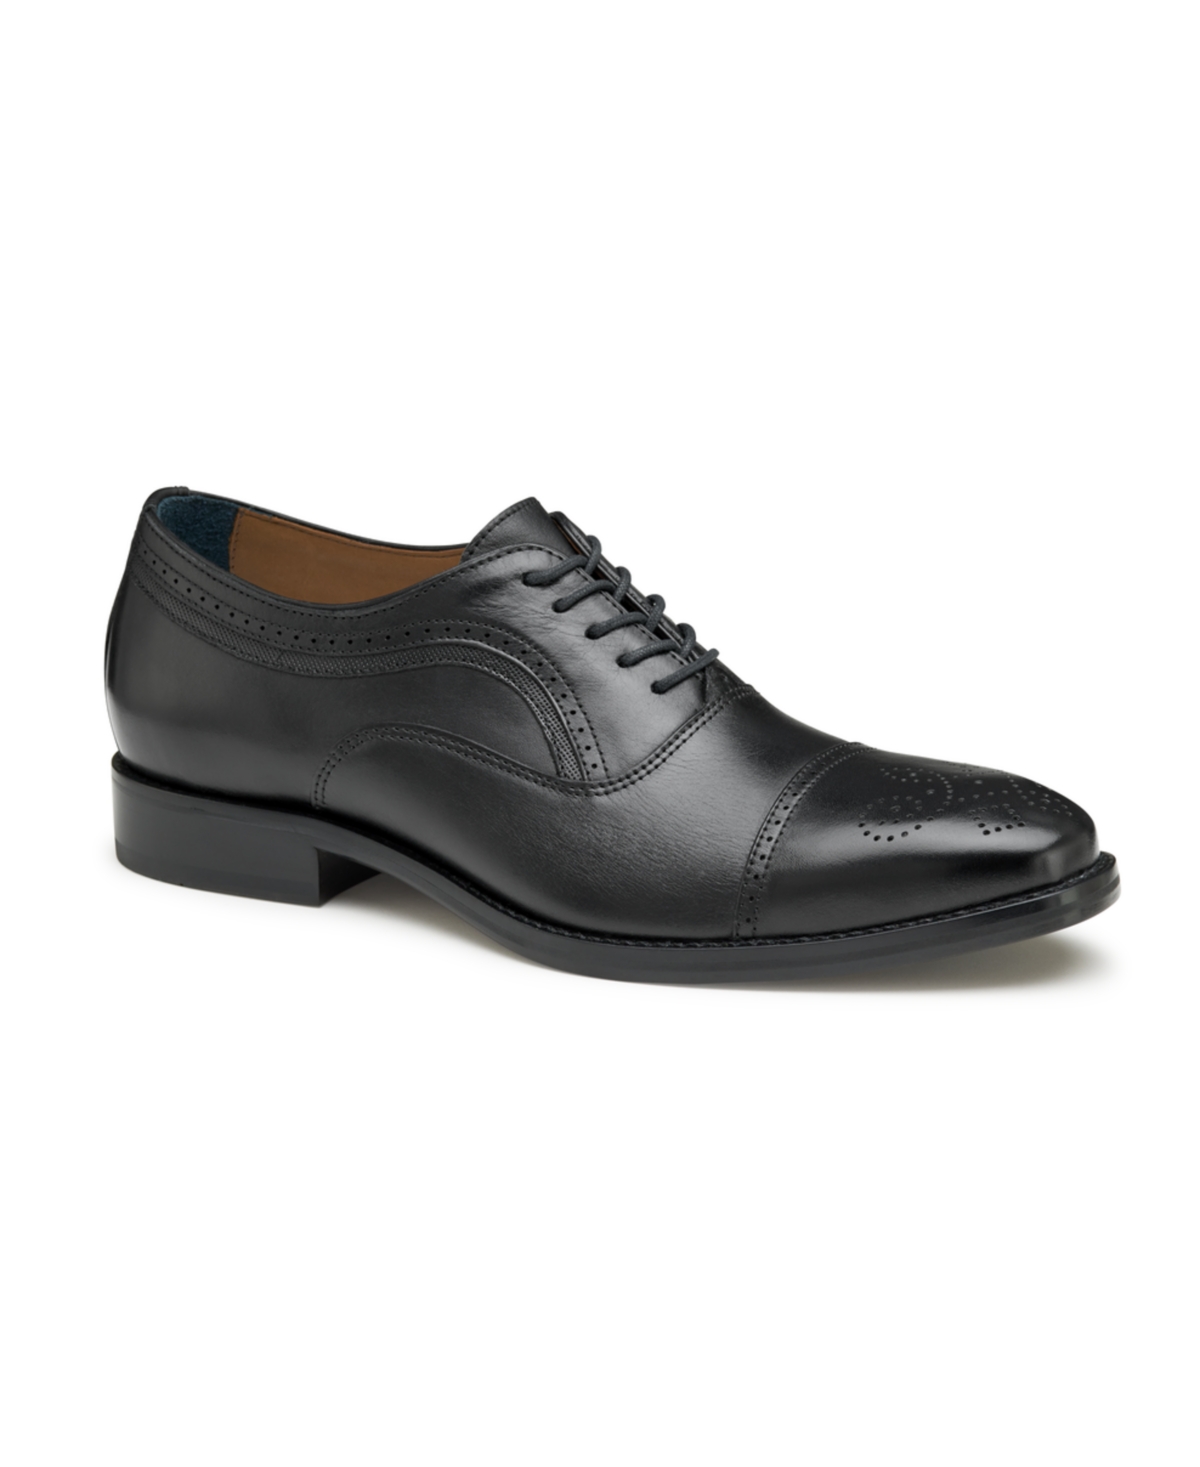 Men's Danridge Cap Toe Dress Shoes - Black